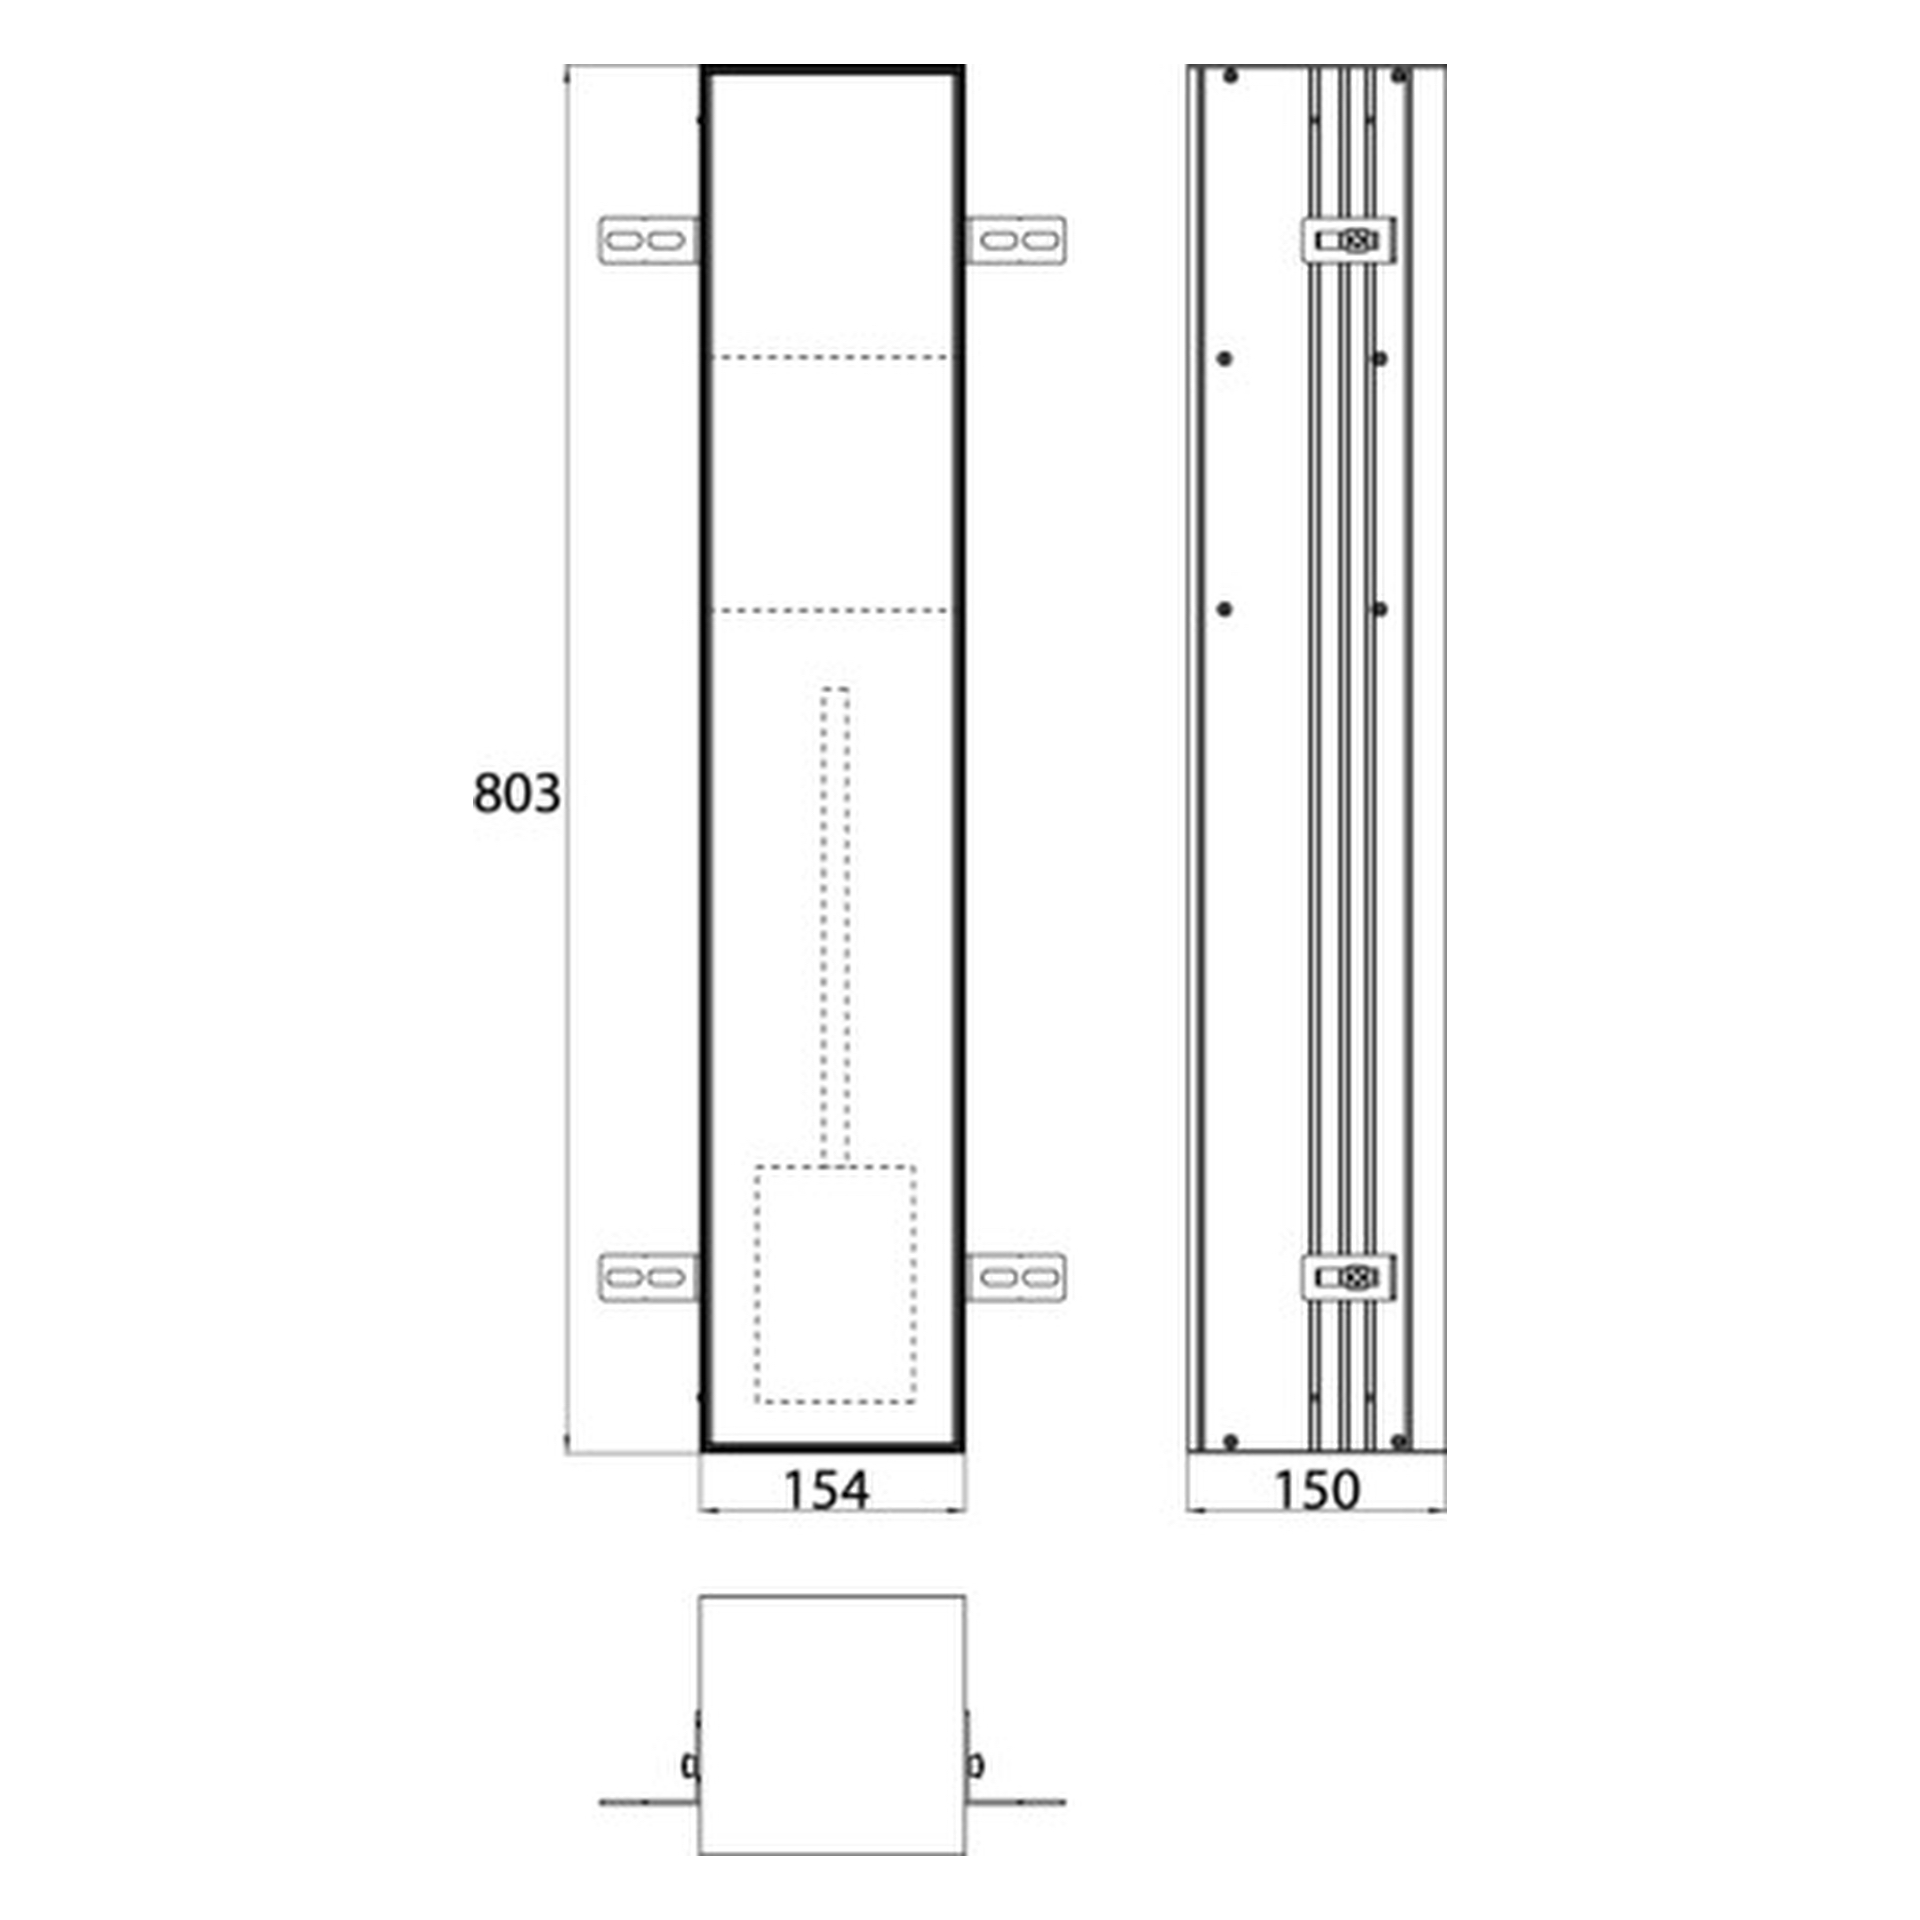 WC-Modul asis plus, Unterputz Papierentnahme oben, 803 mm, Tür rechts